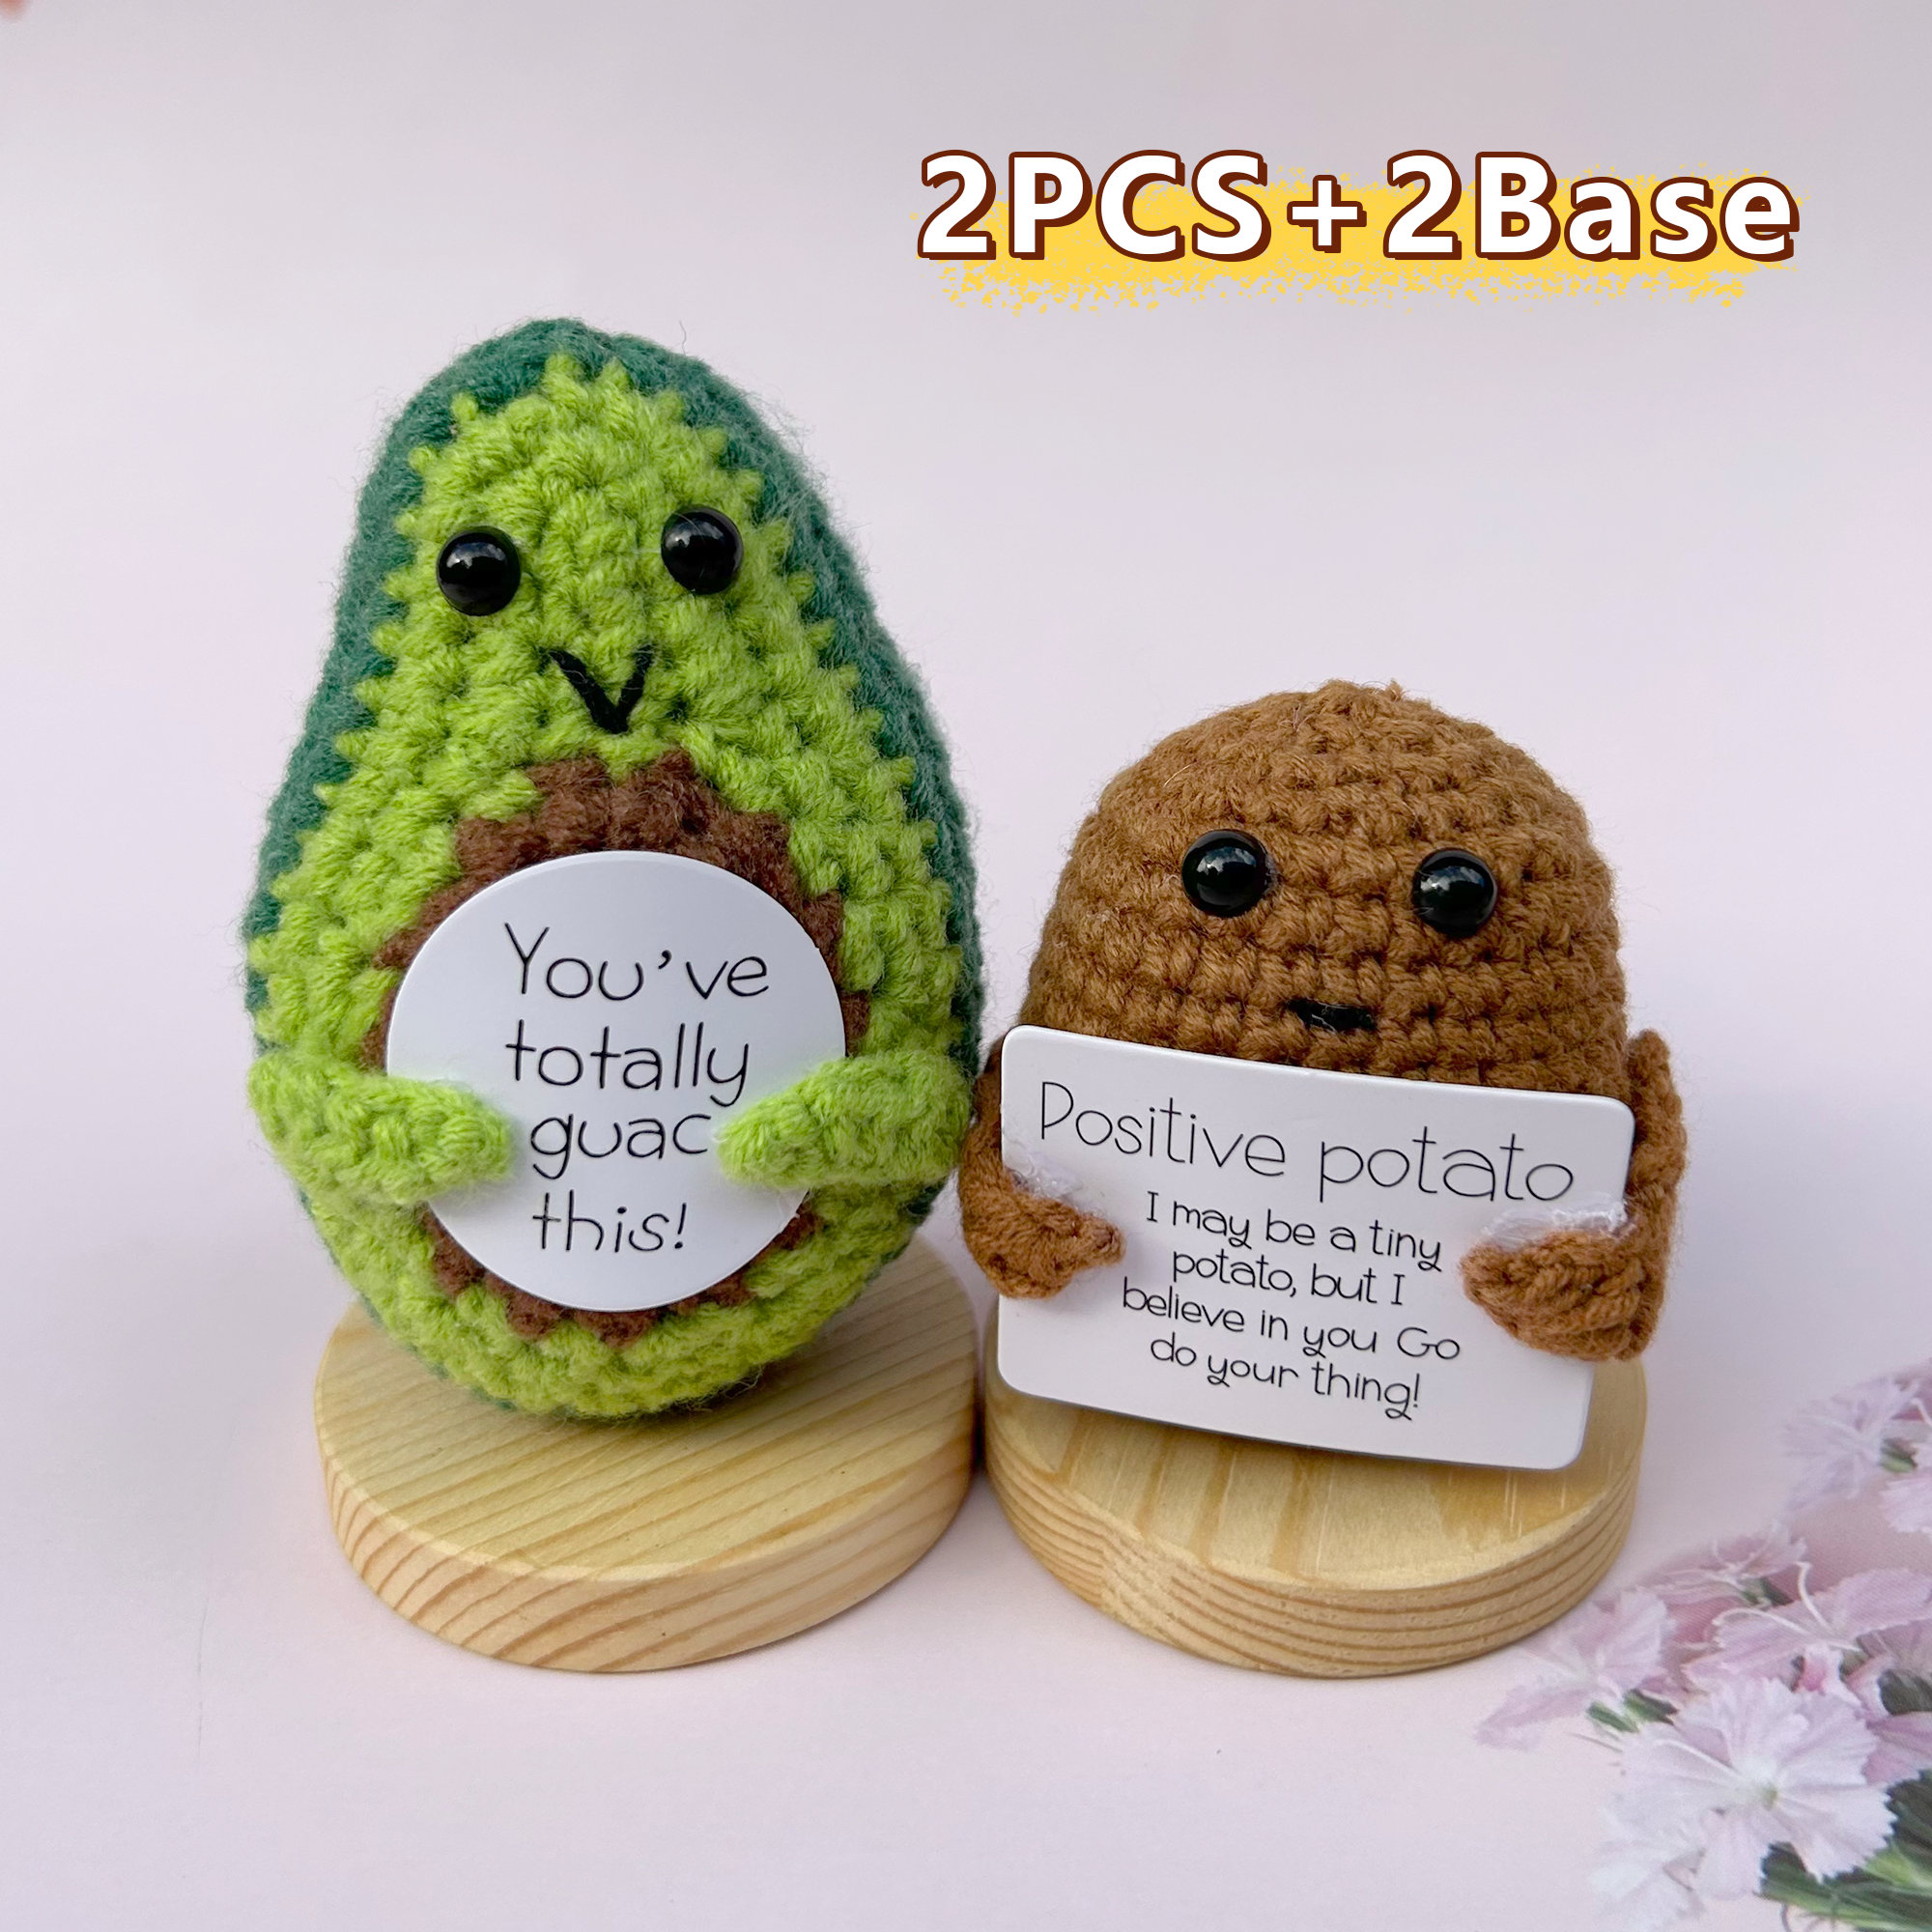 positive support Avocado with Affirmative Card, Handmade Cute Crochet  Avocado